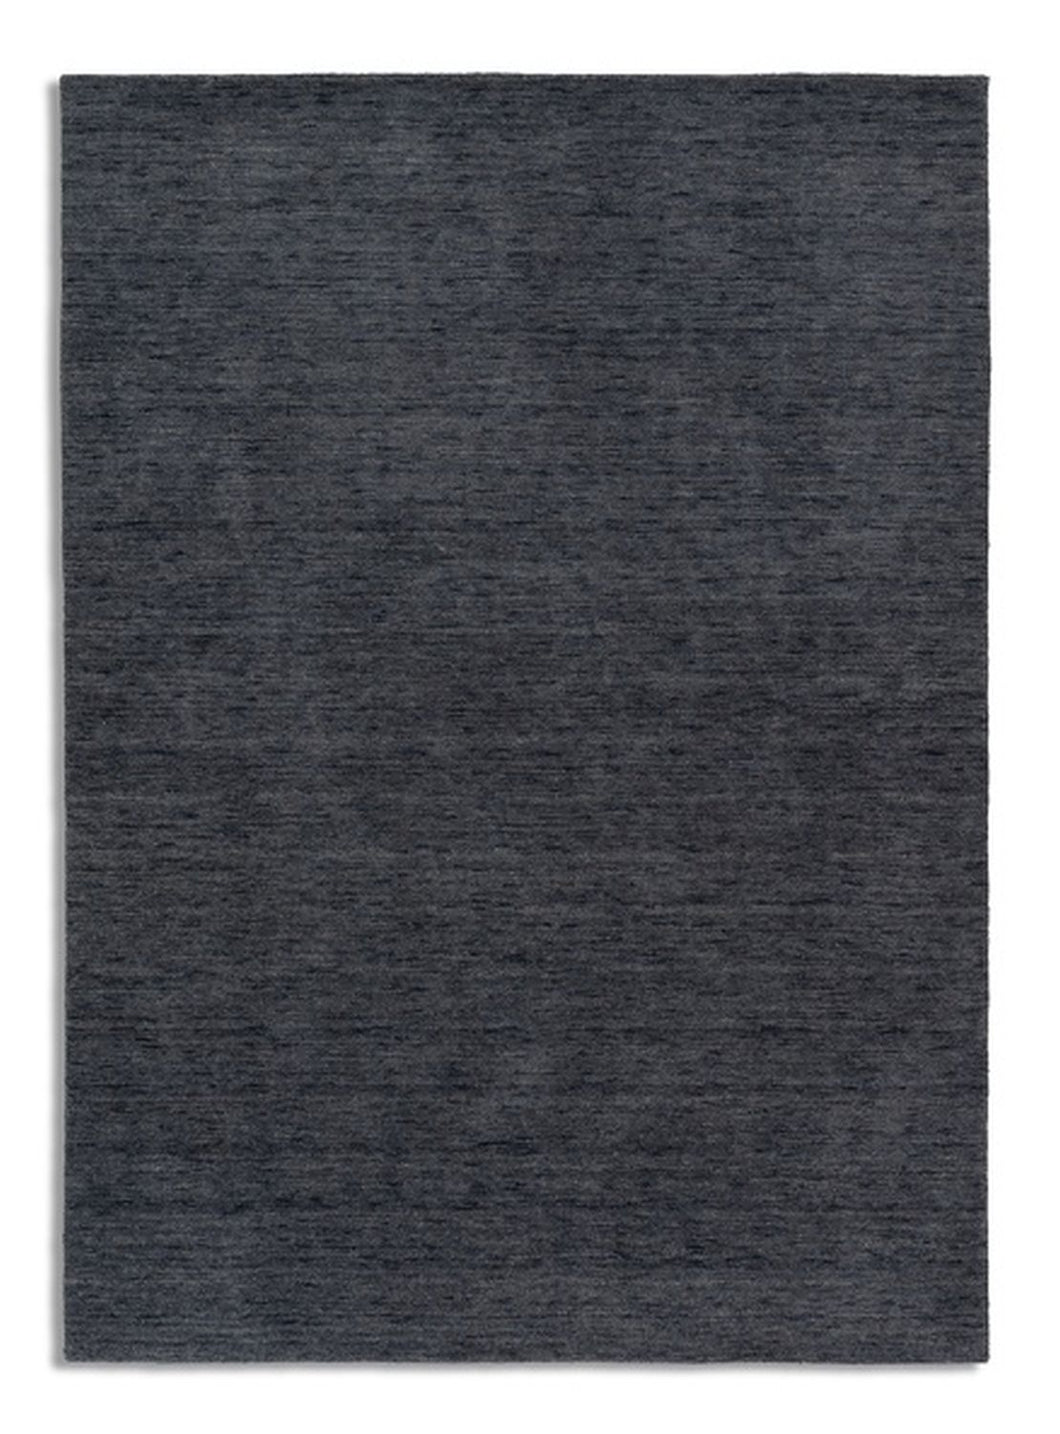 Barolo – 6677 200 020 – blau – edler Woll-Teppich, 5 elegante Farben, 4 Größen